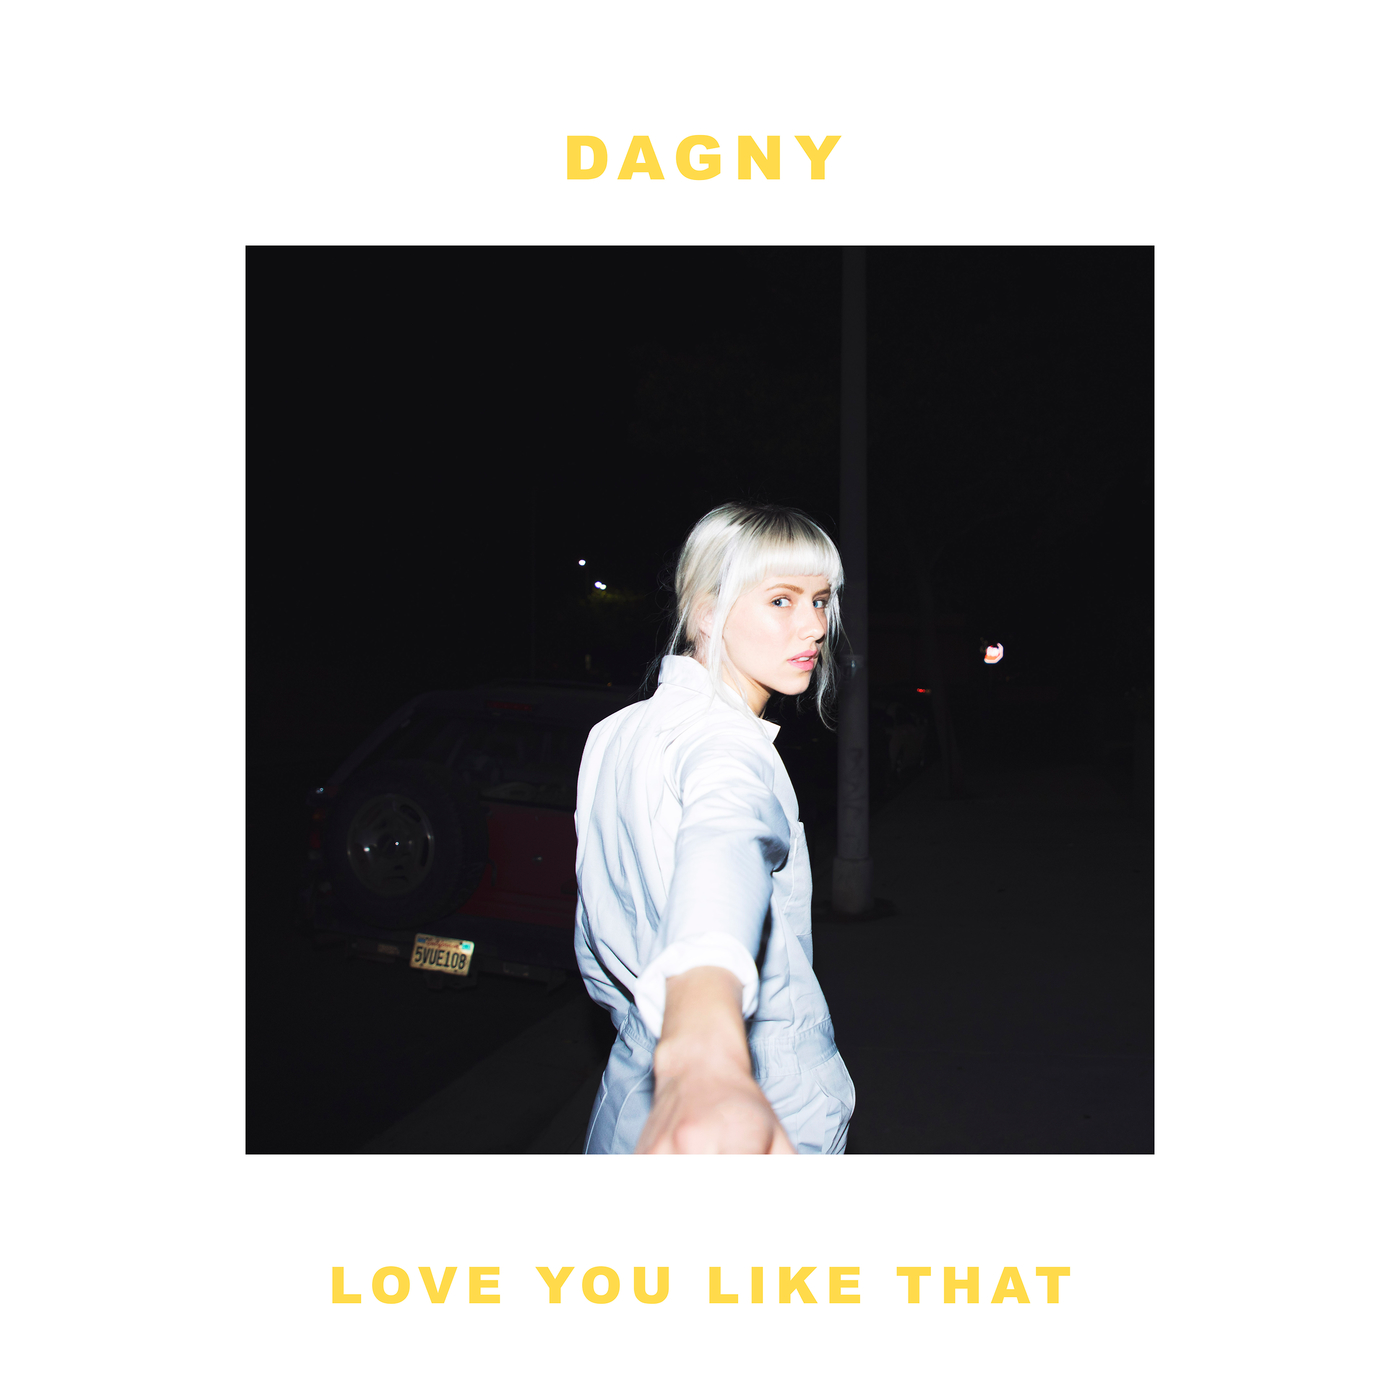 Dagny – “I Love You Like That”